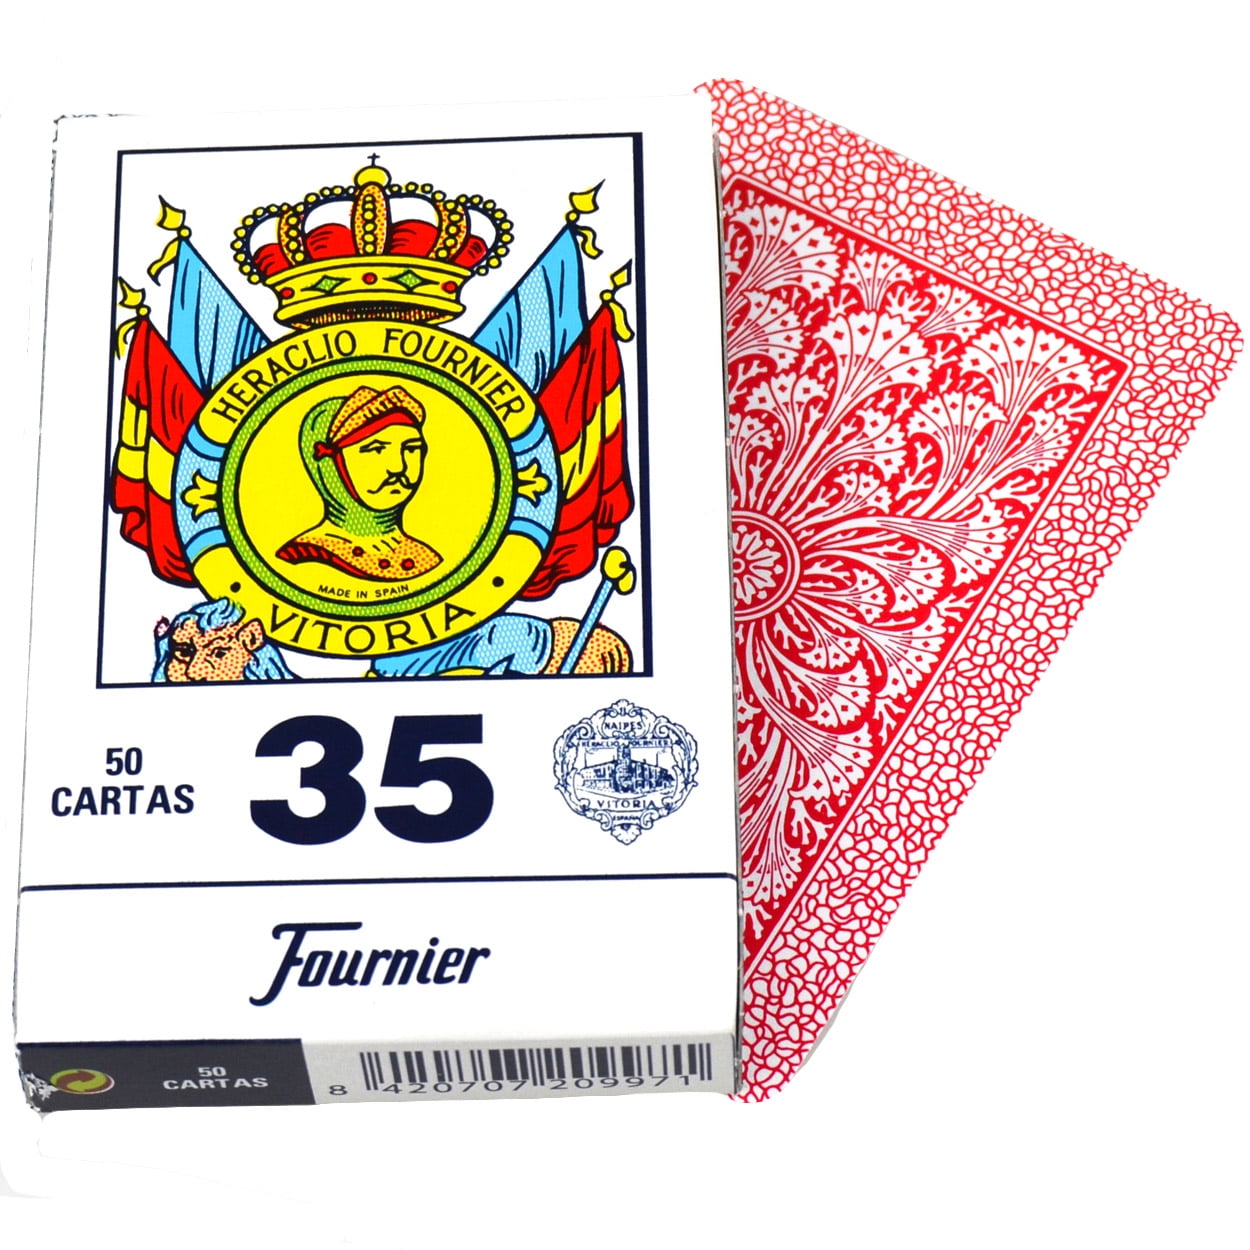 1 Spanish 2 Deck Set Blue & Red Playing Cards 40 Cartas Heraclio Fournier No 